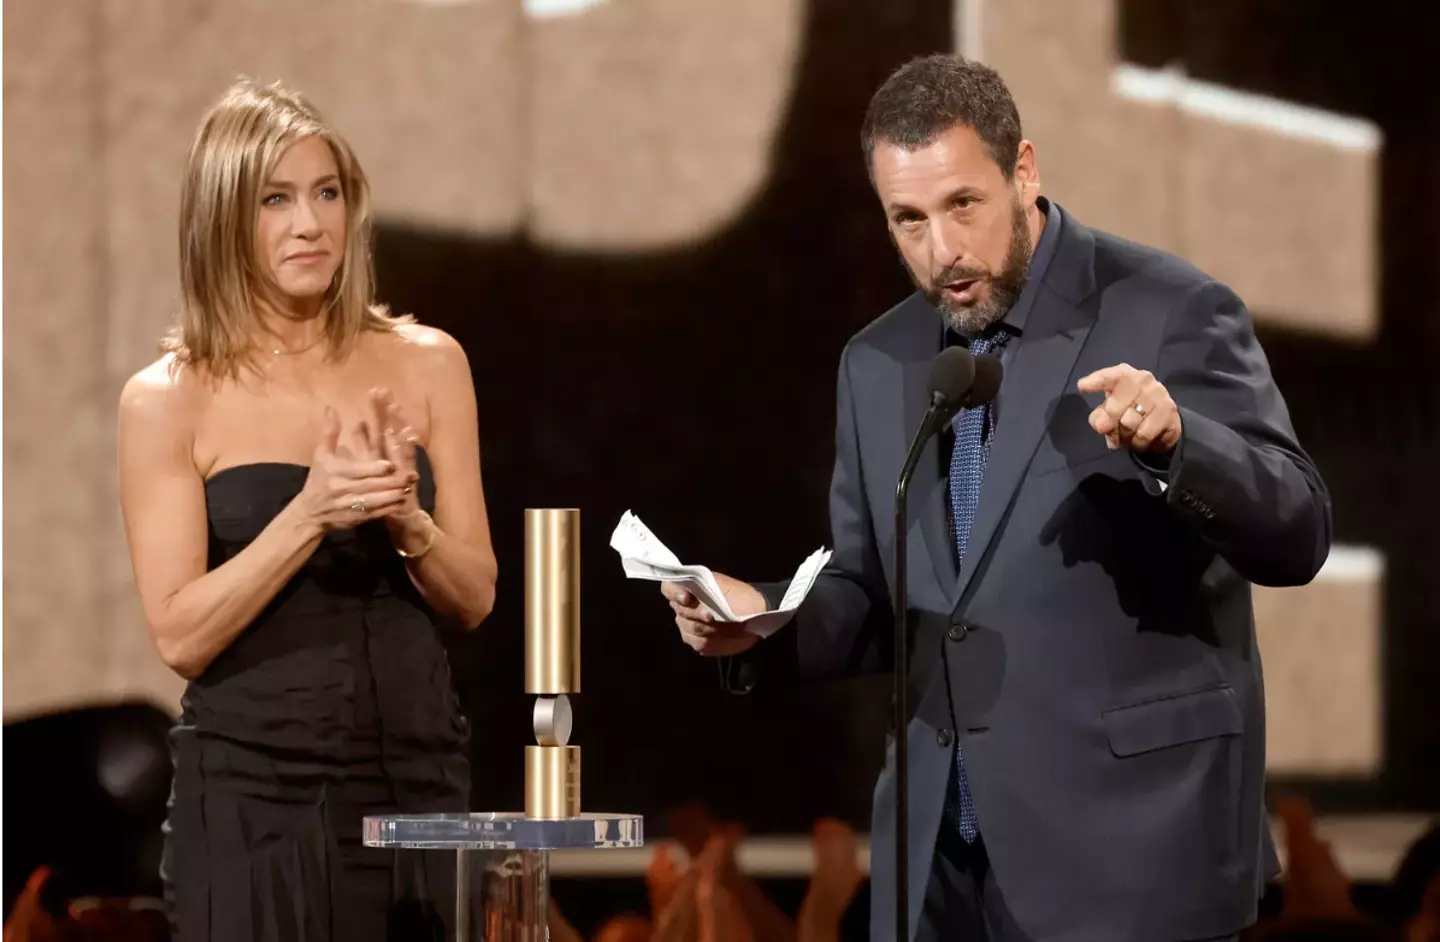 Jennifer Aniston presented the award.